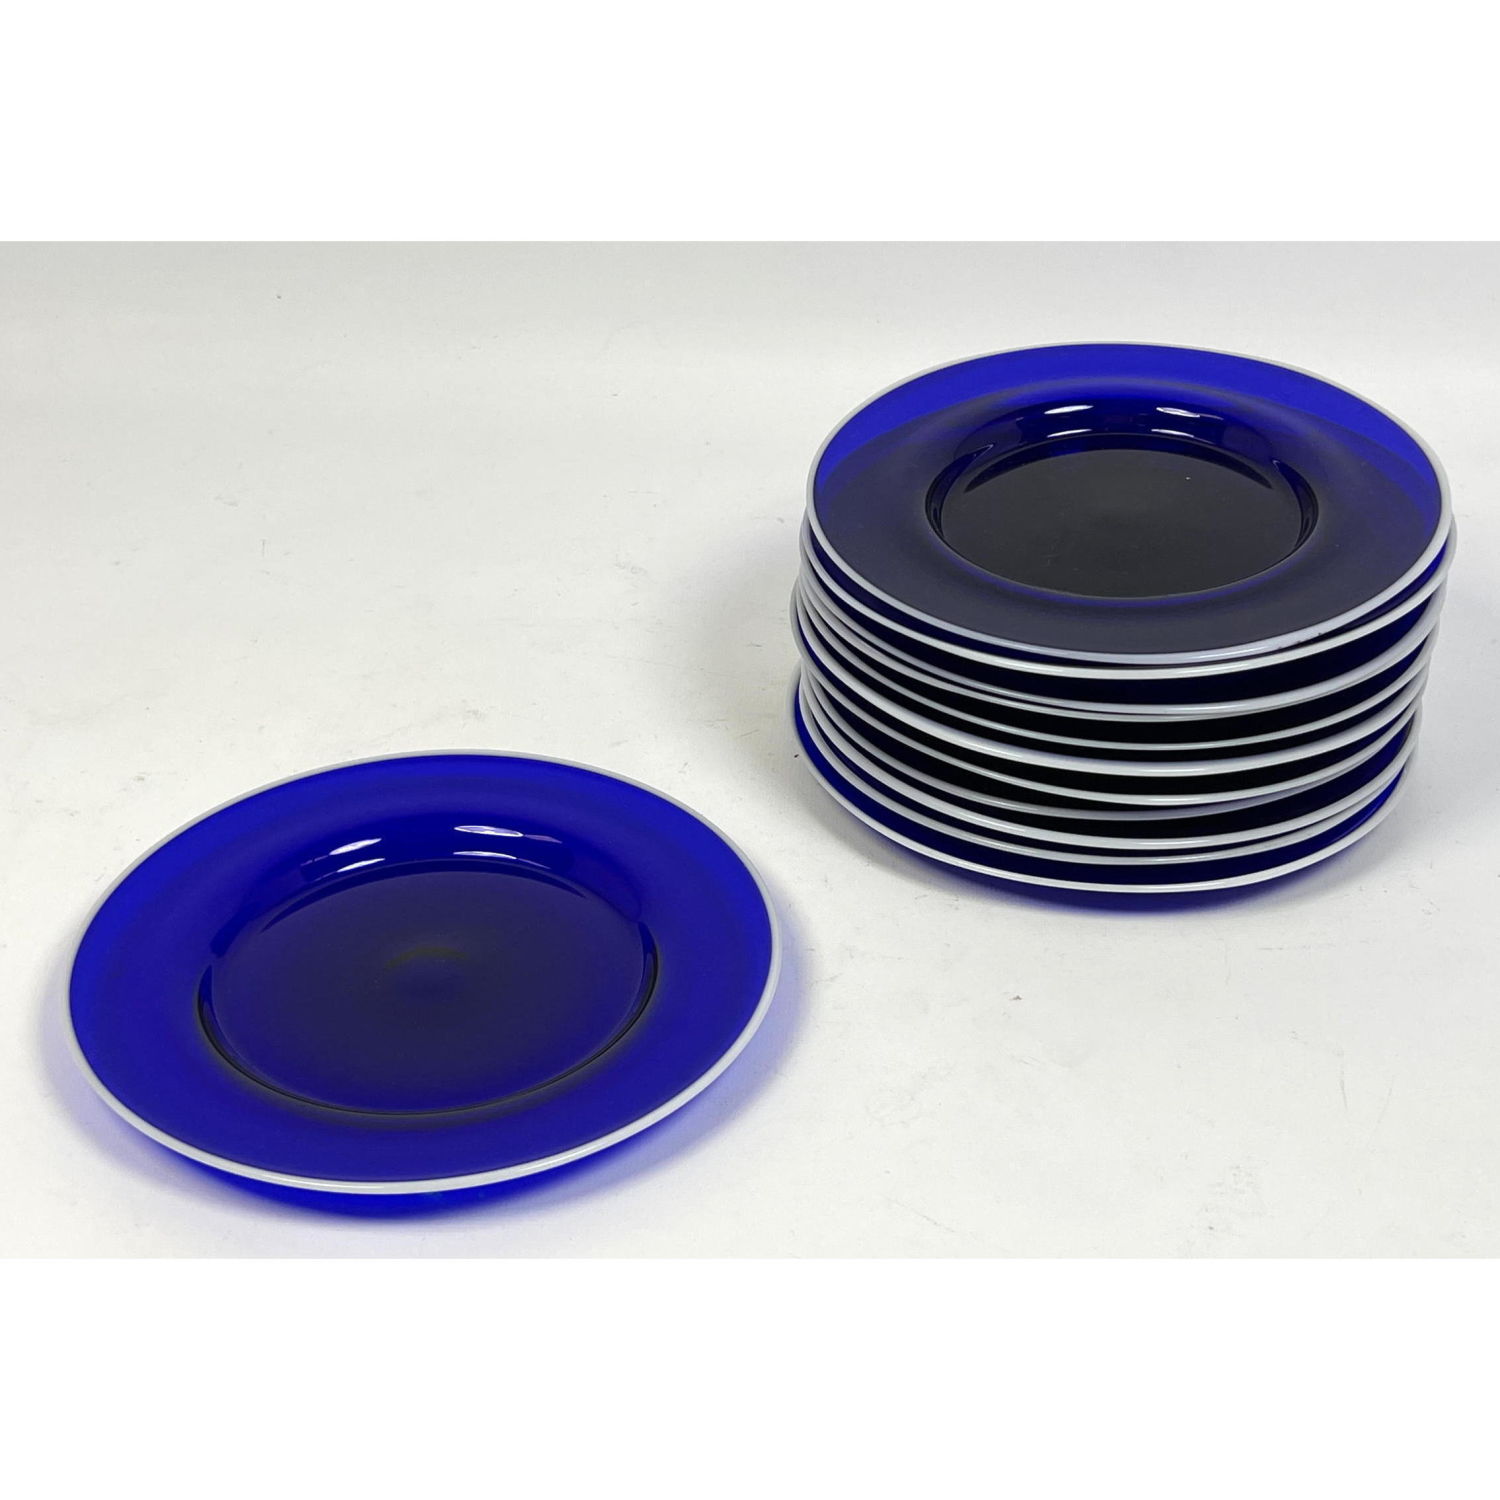 Set of 12 hand blown blue glass plates